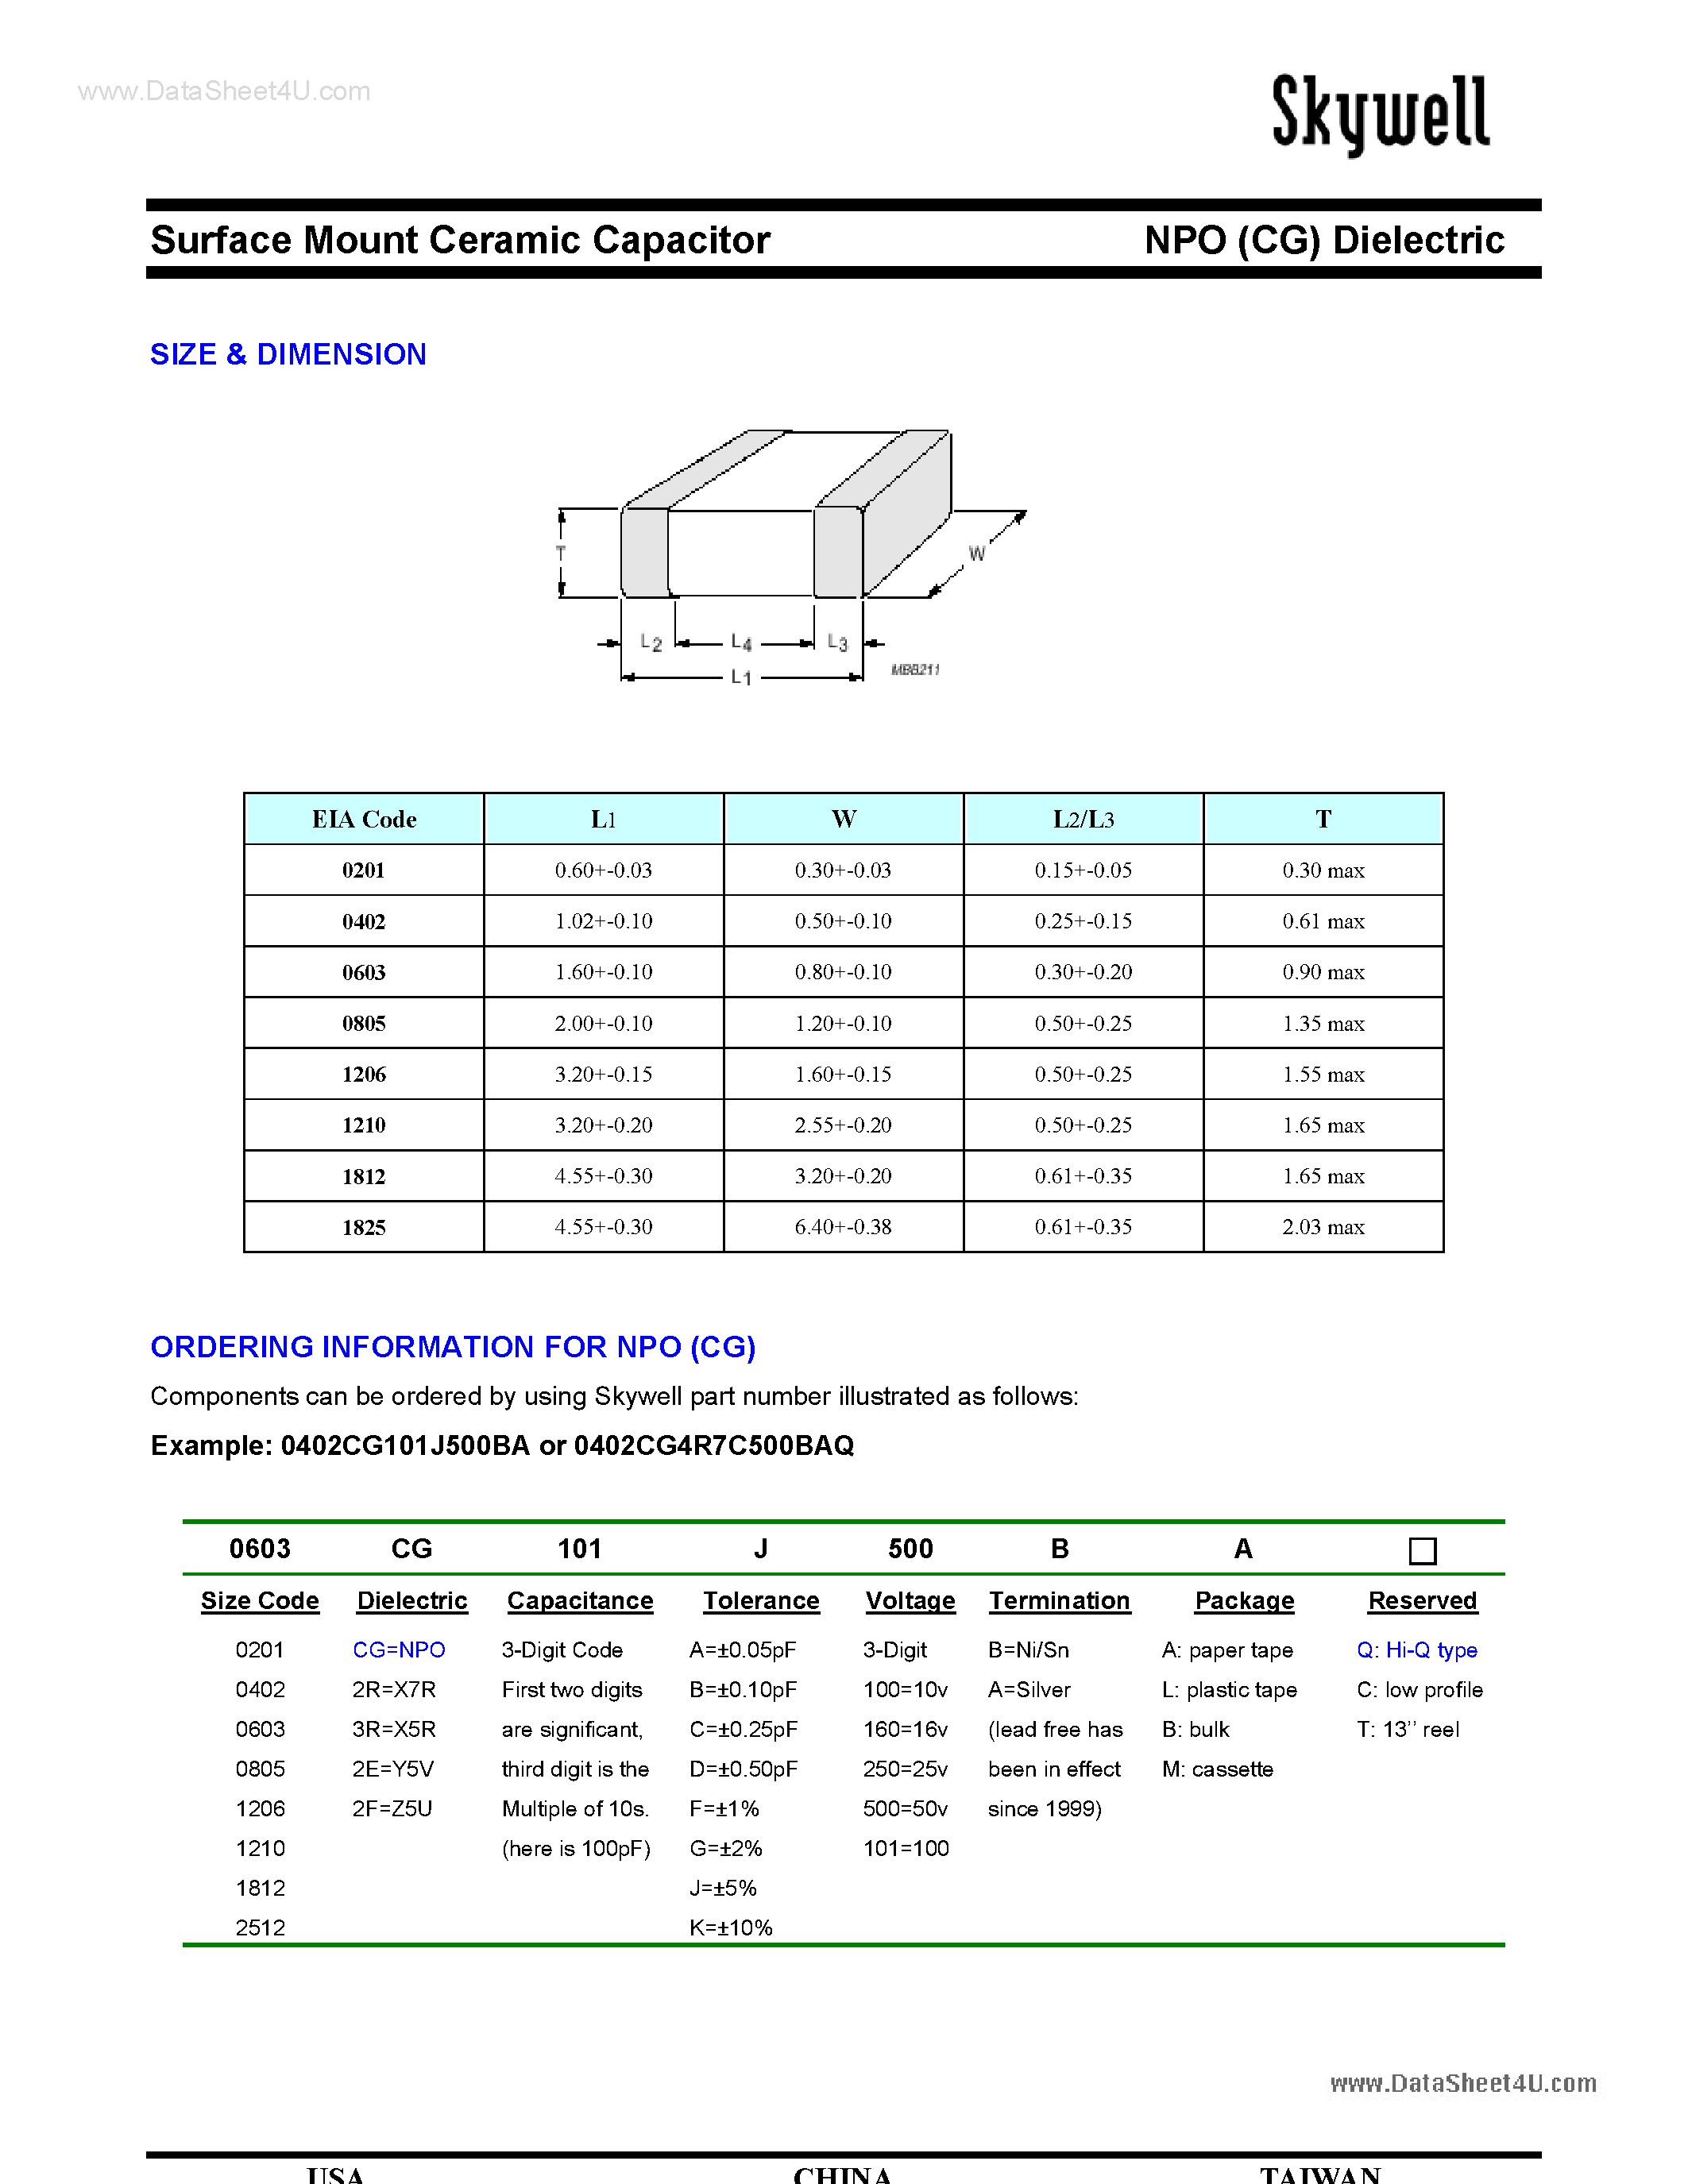 Даташит 06032Exxxx - SUrface Mount Ceramic Capacitor страница 2